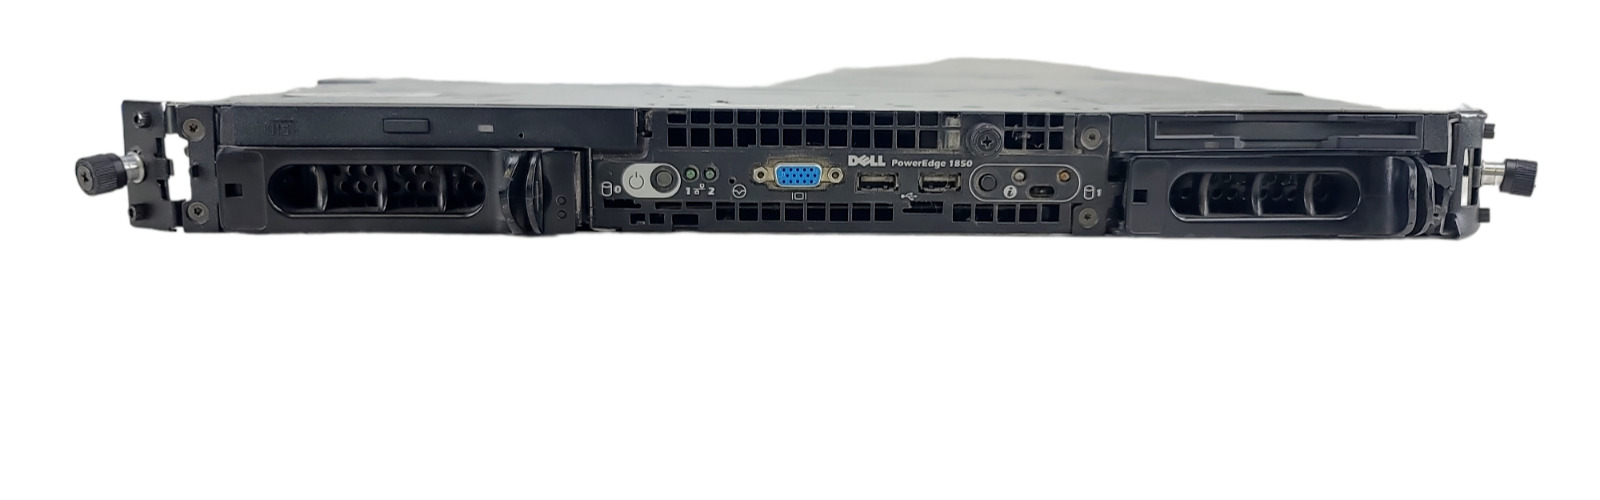 Dell PowerEdge 1850 Server Blade